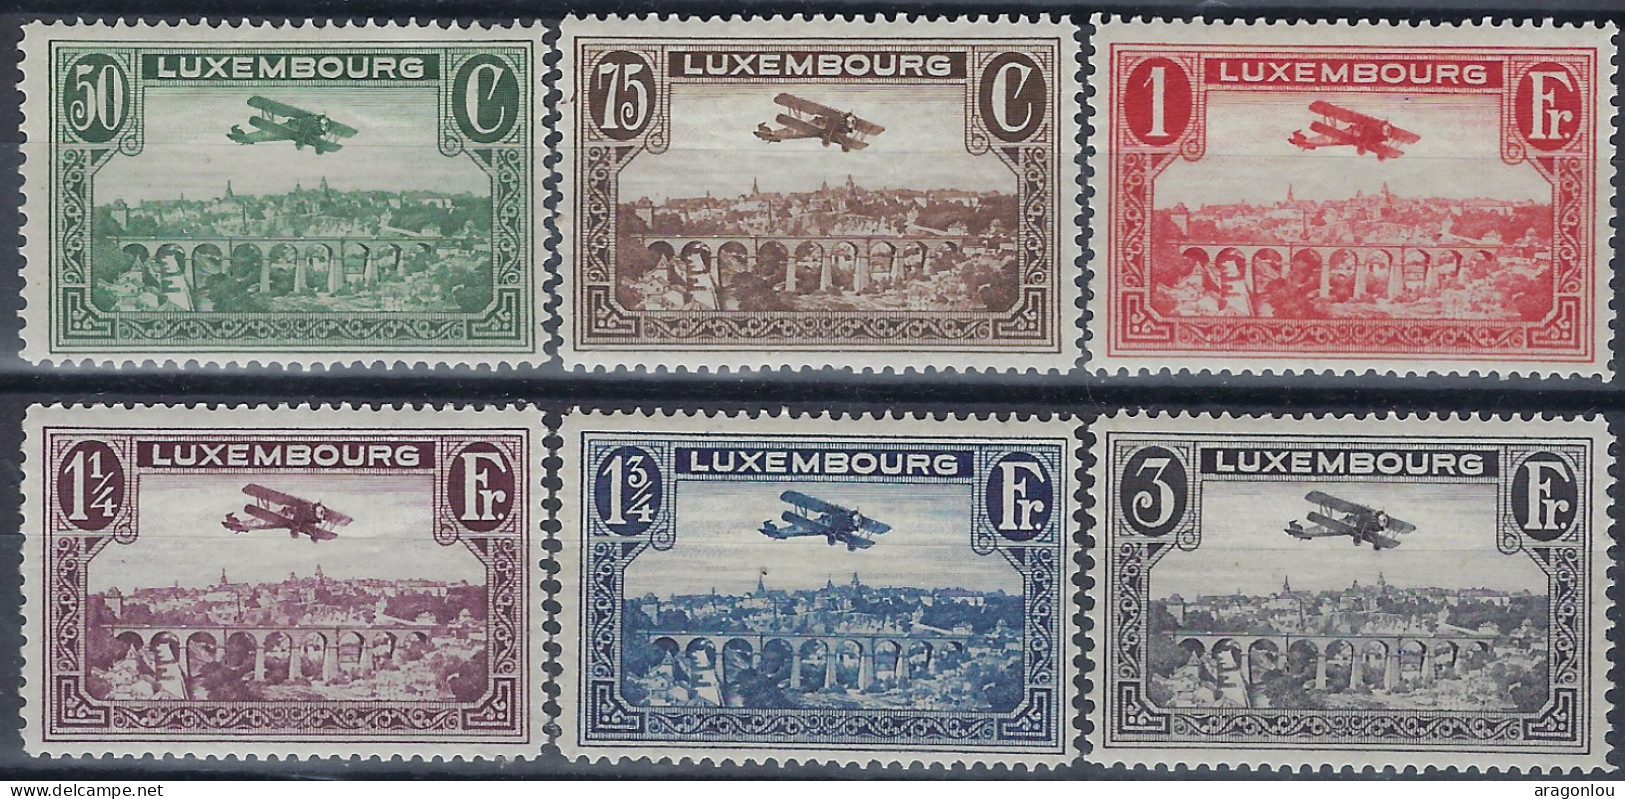 Luxembourg - Luxemburg - Timbres  1931      2 Séries   Biplan  Breguet     MNH** - Nuovi